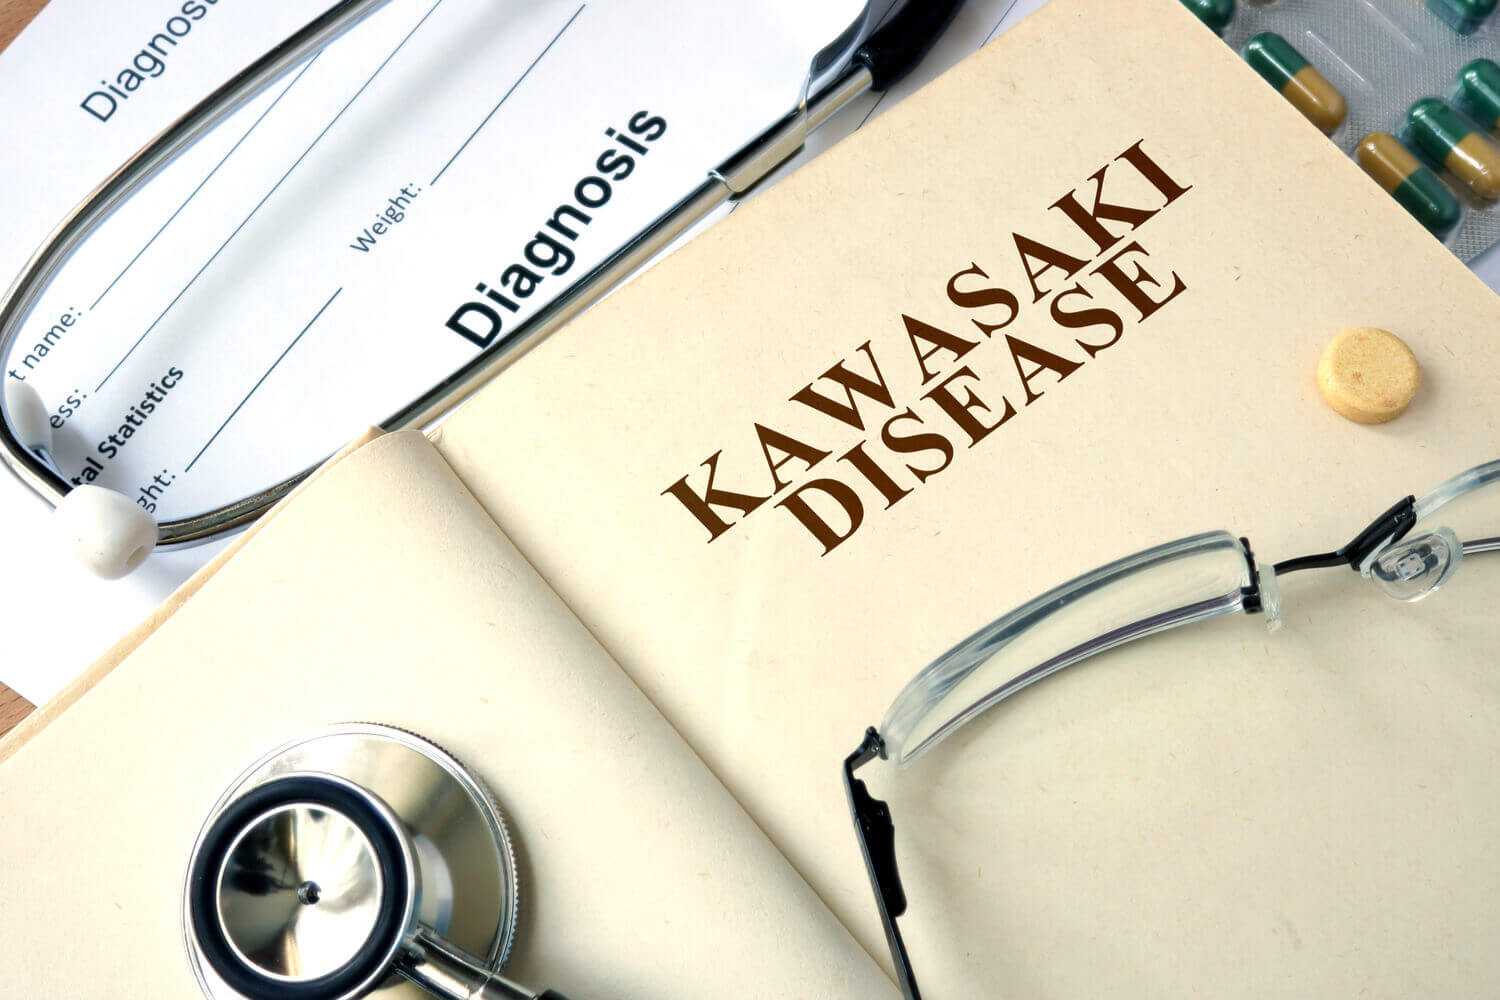 Kawasaki Disease in children